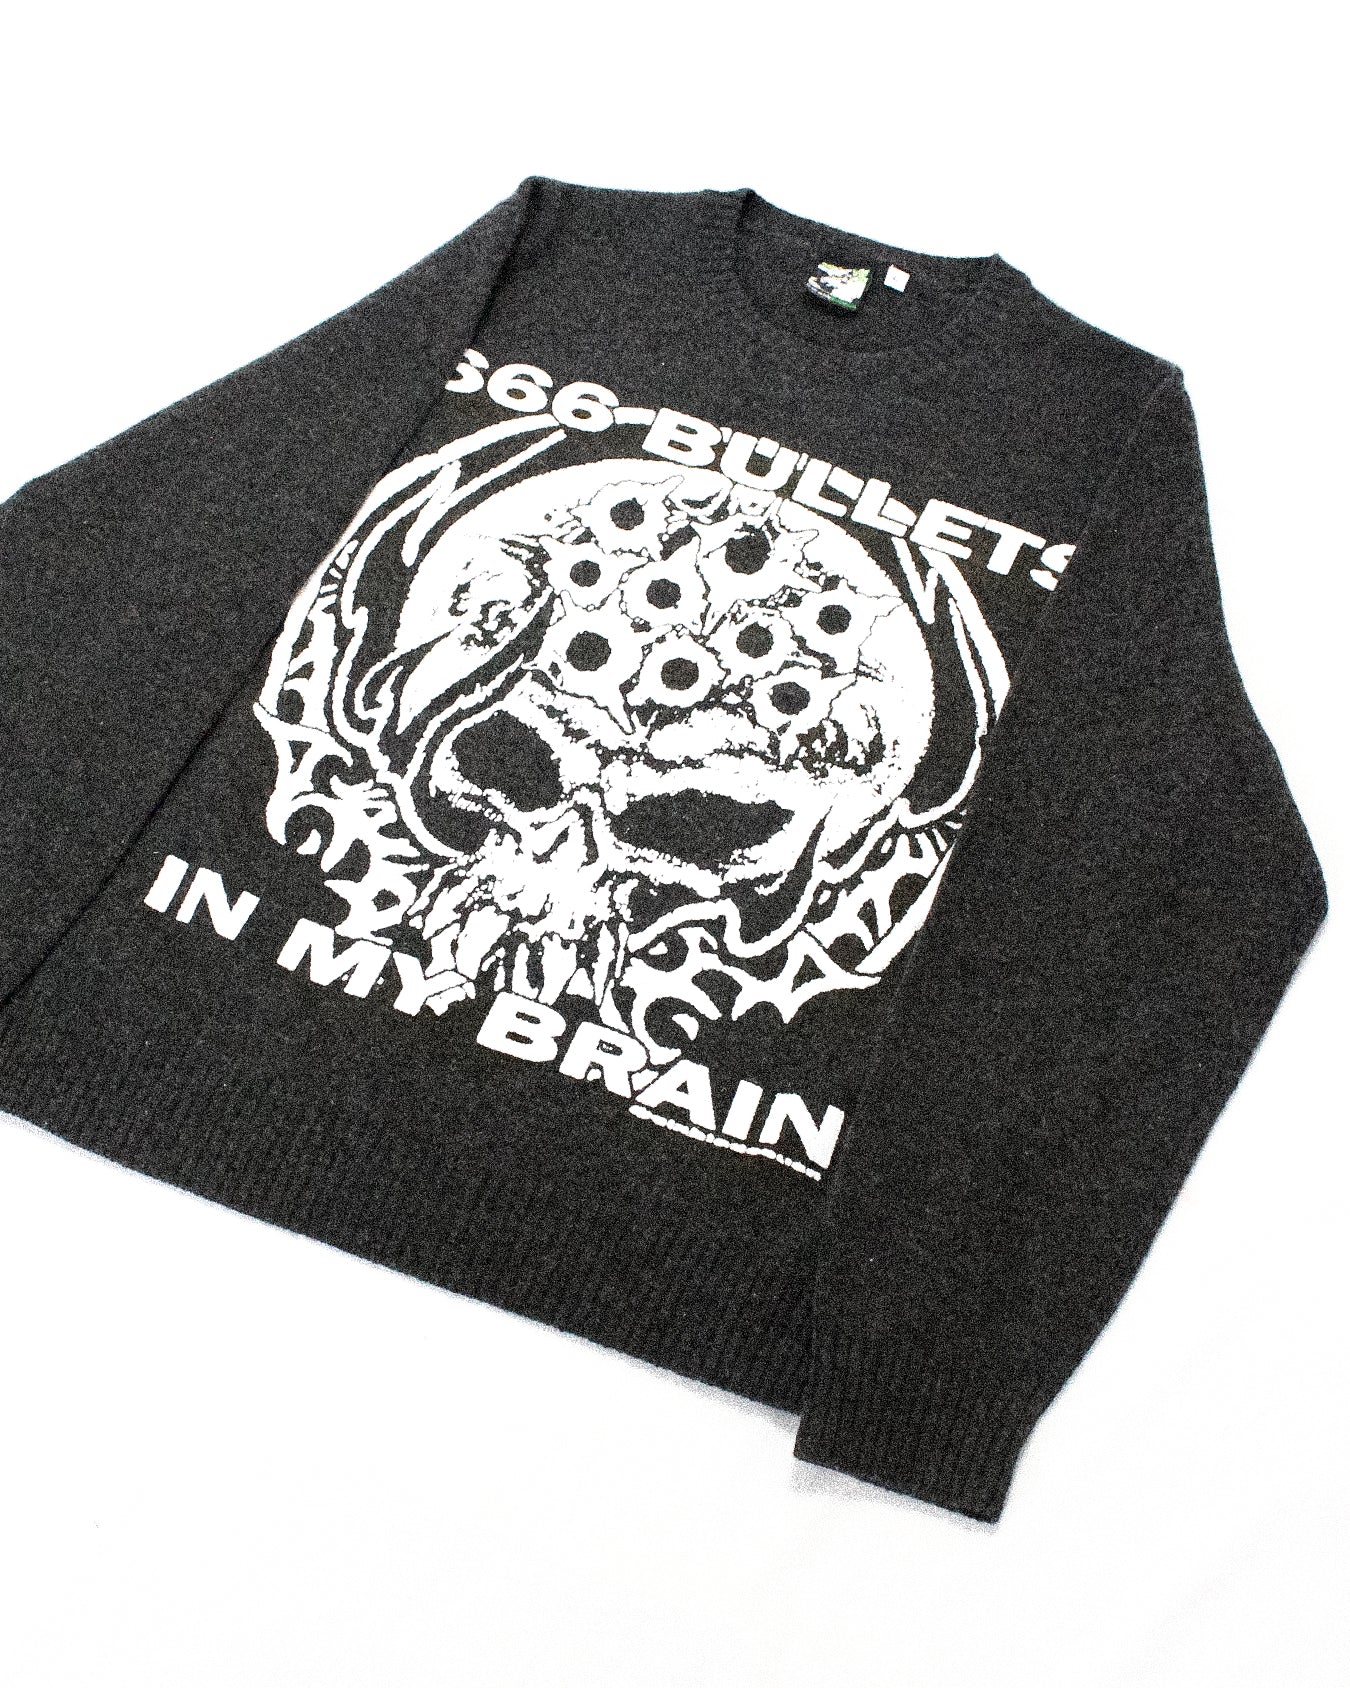 "666 BULLETS IN MY BRAIN" Pullover Wool Sweater (L)